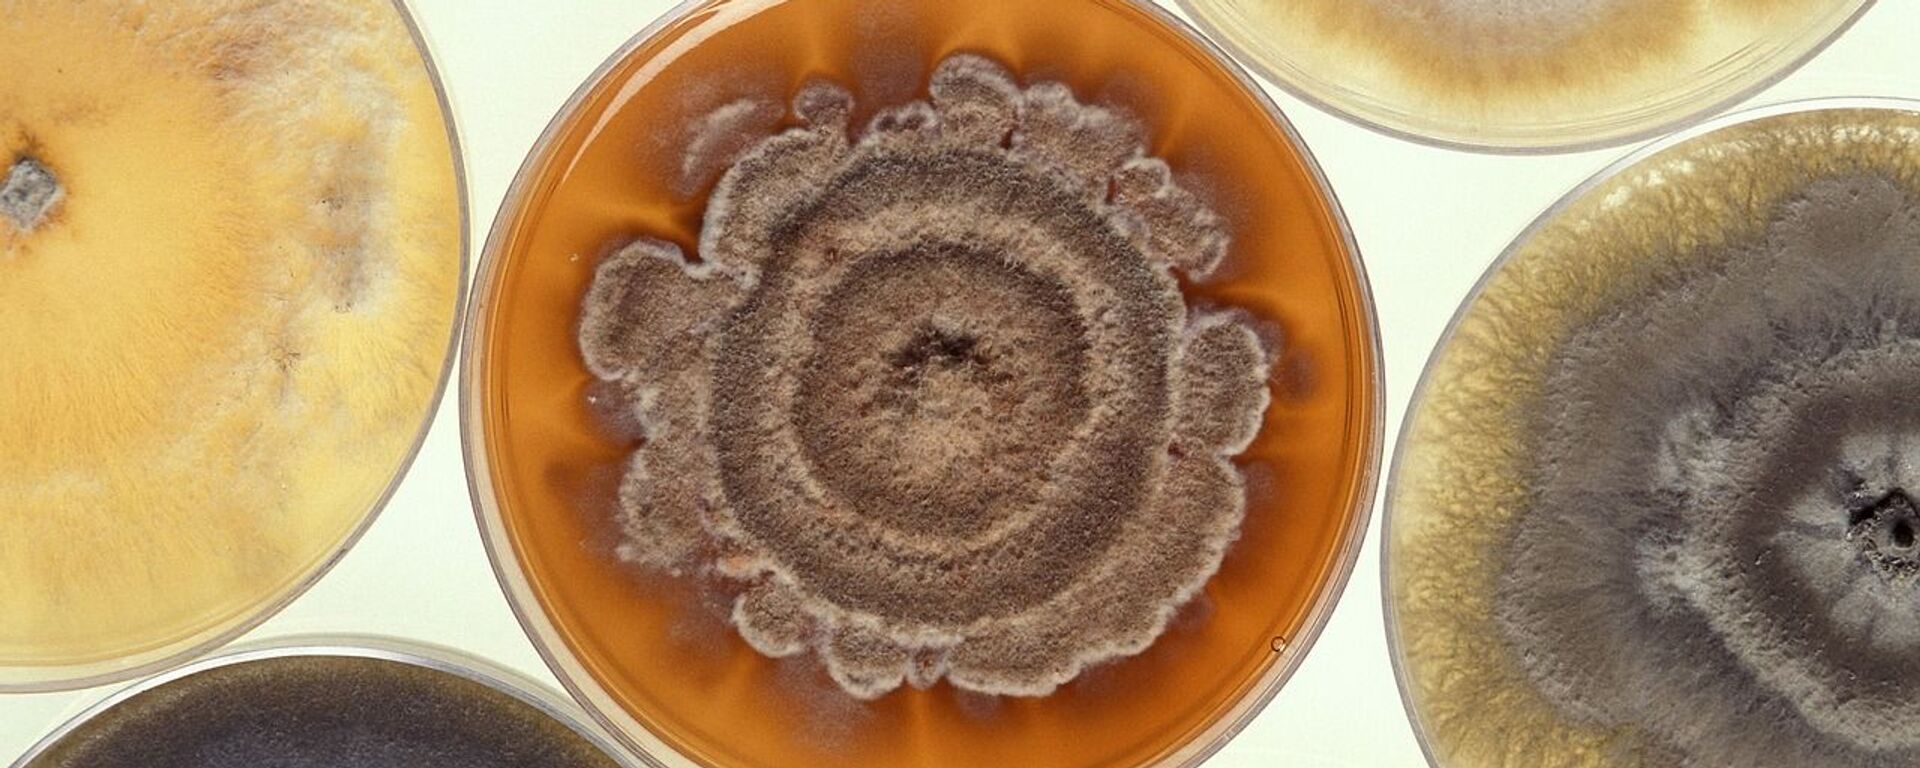 Mold Growing Petri Dishes - Sputnik International, 1920, 27.03.2021